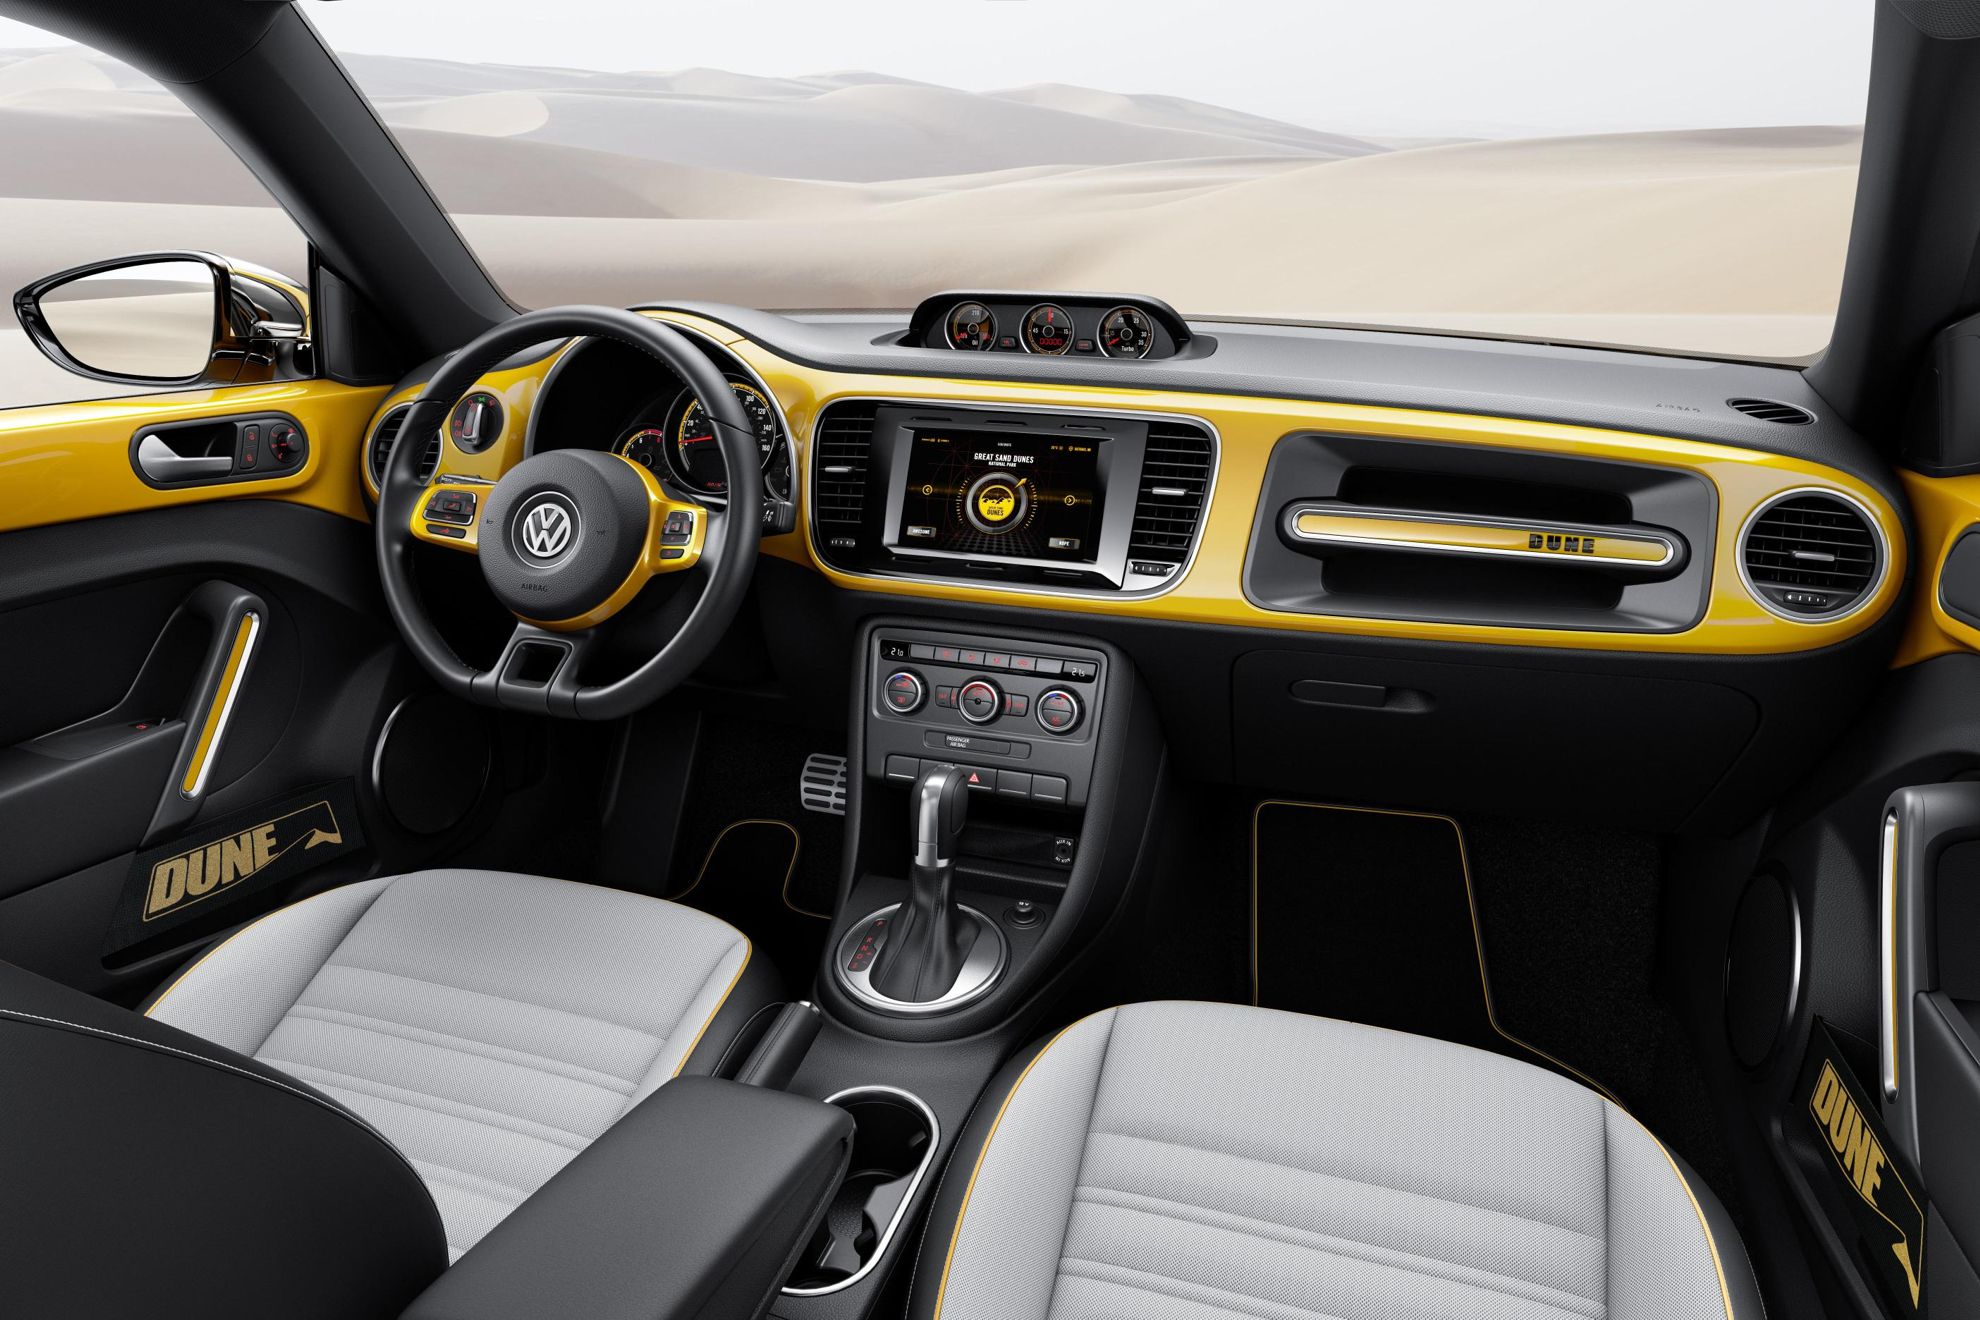 NAIAS 2014 – Volkswagen Concept Car